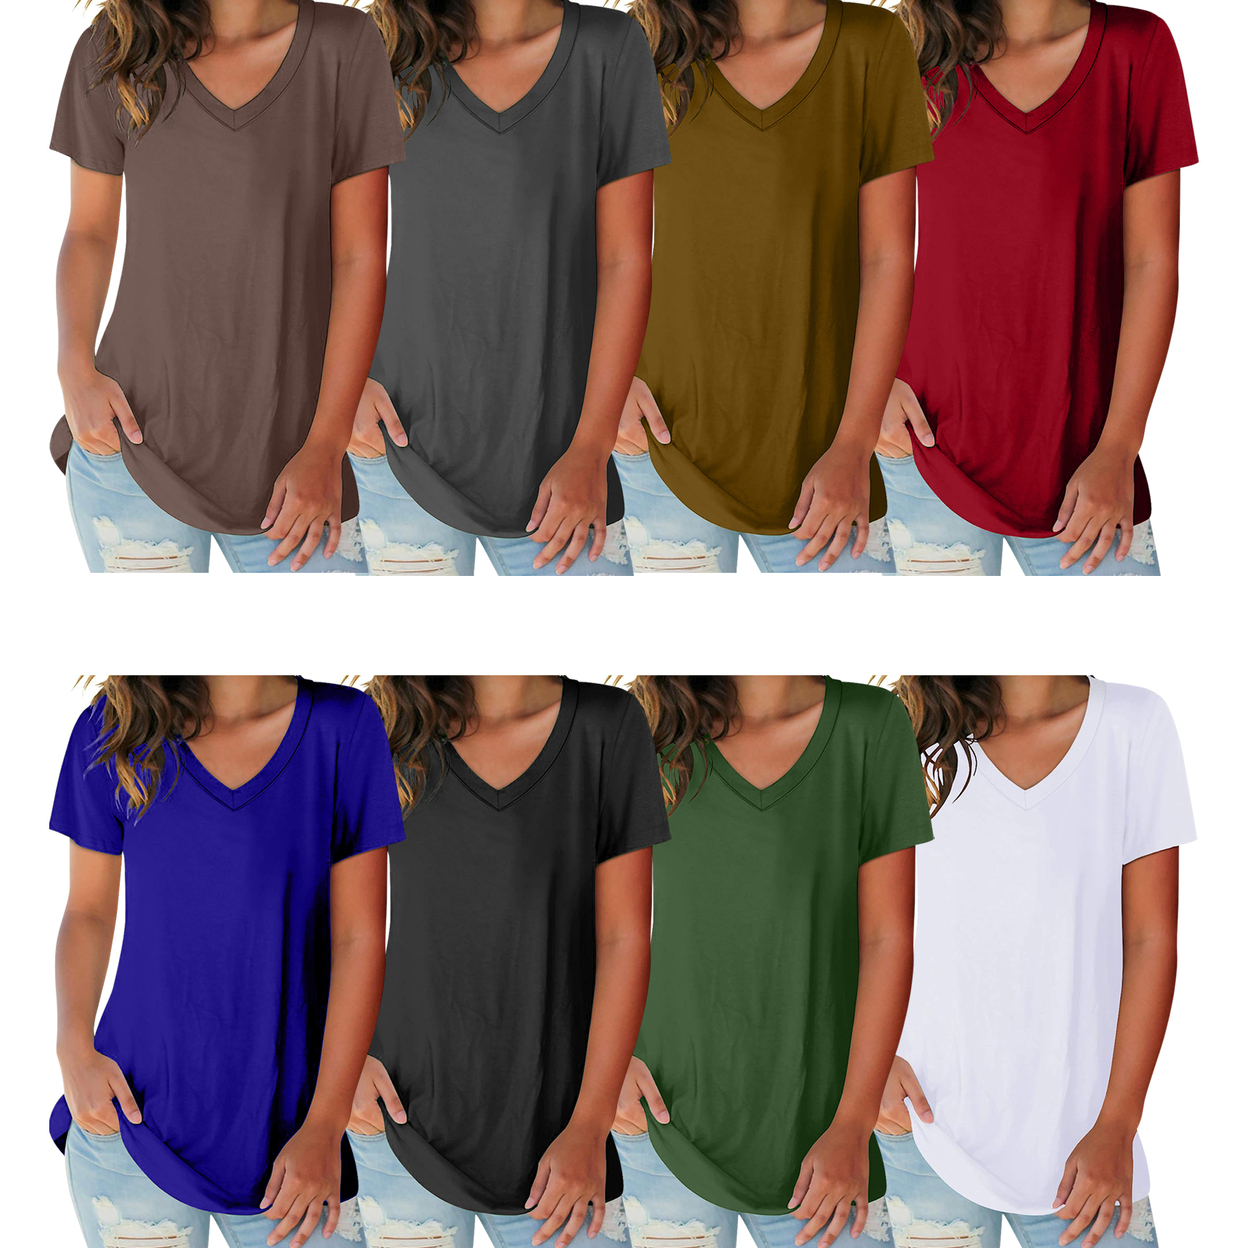 Women's Ultra-Soft Smooth Cotton Blend Basic V-Neck Short Sleeve Shirts - Mustard, Medium